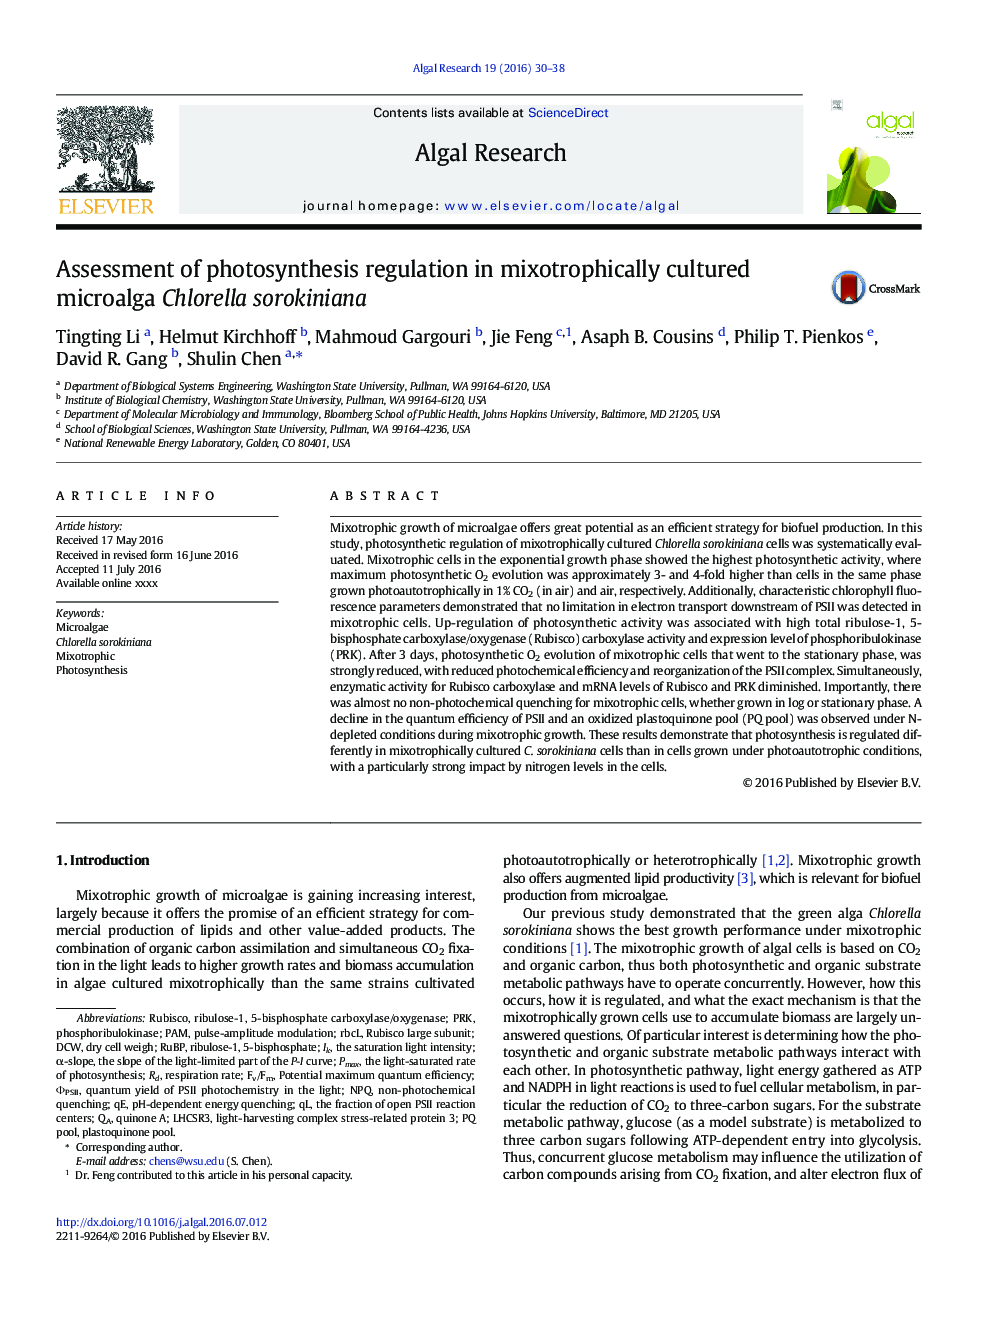 Assessment of photosynthesis regulation in mixotrophically cultured microalga Chlorella sorokiniana